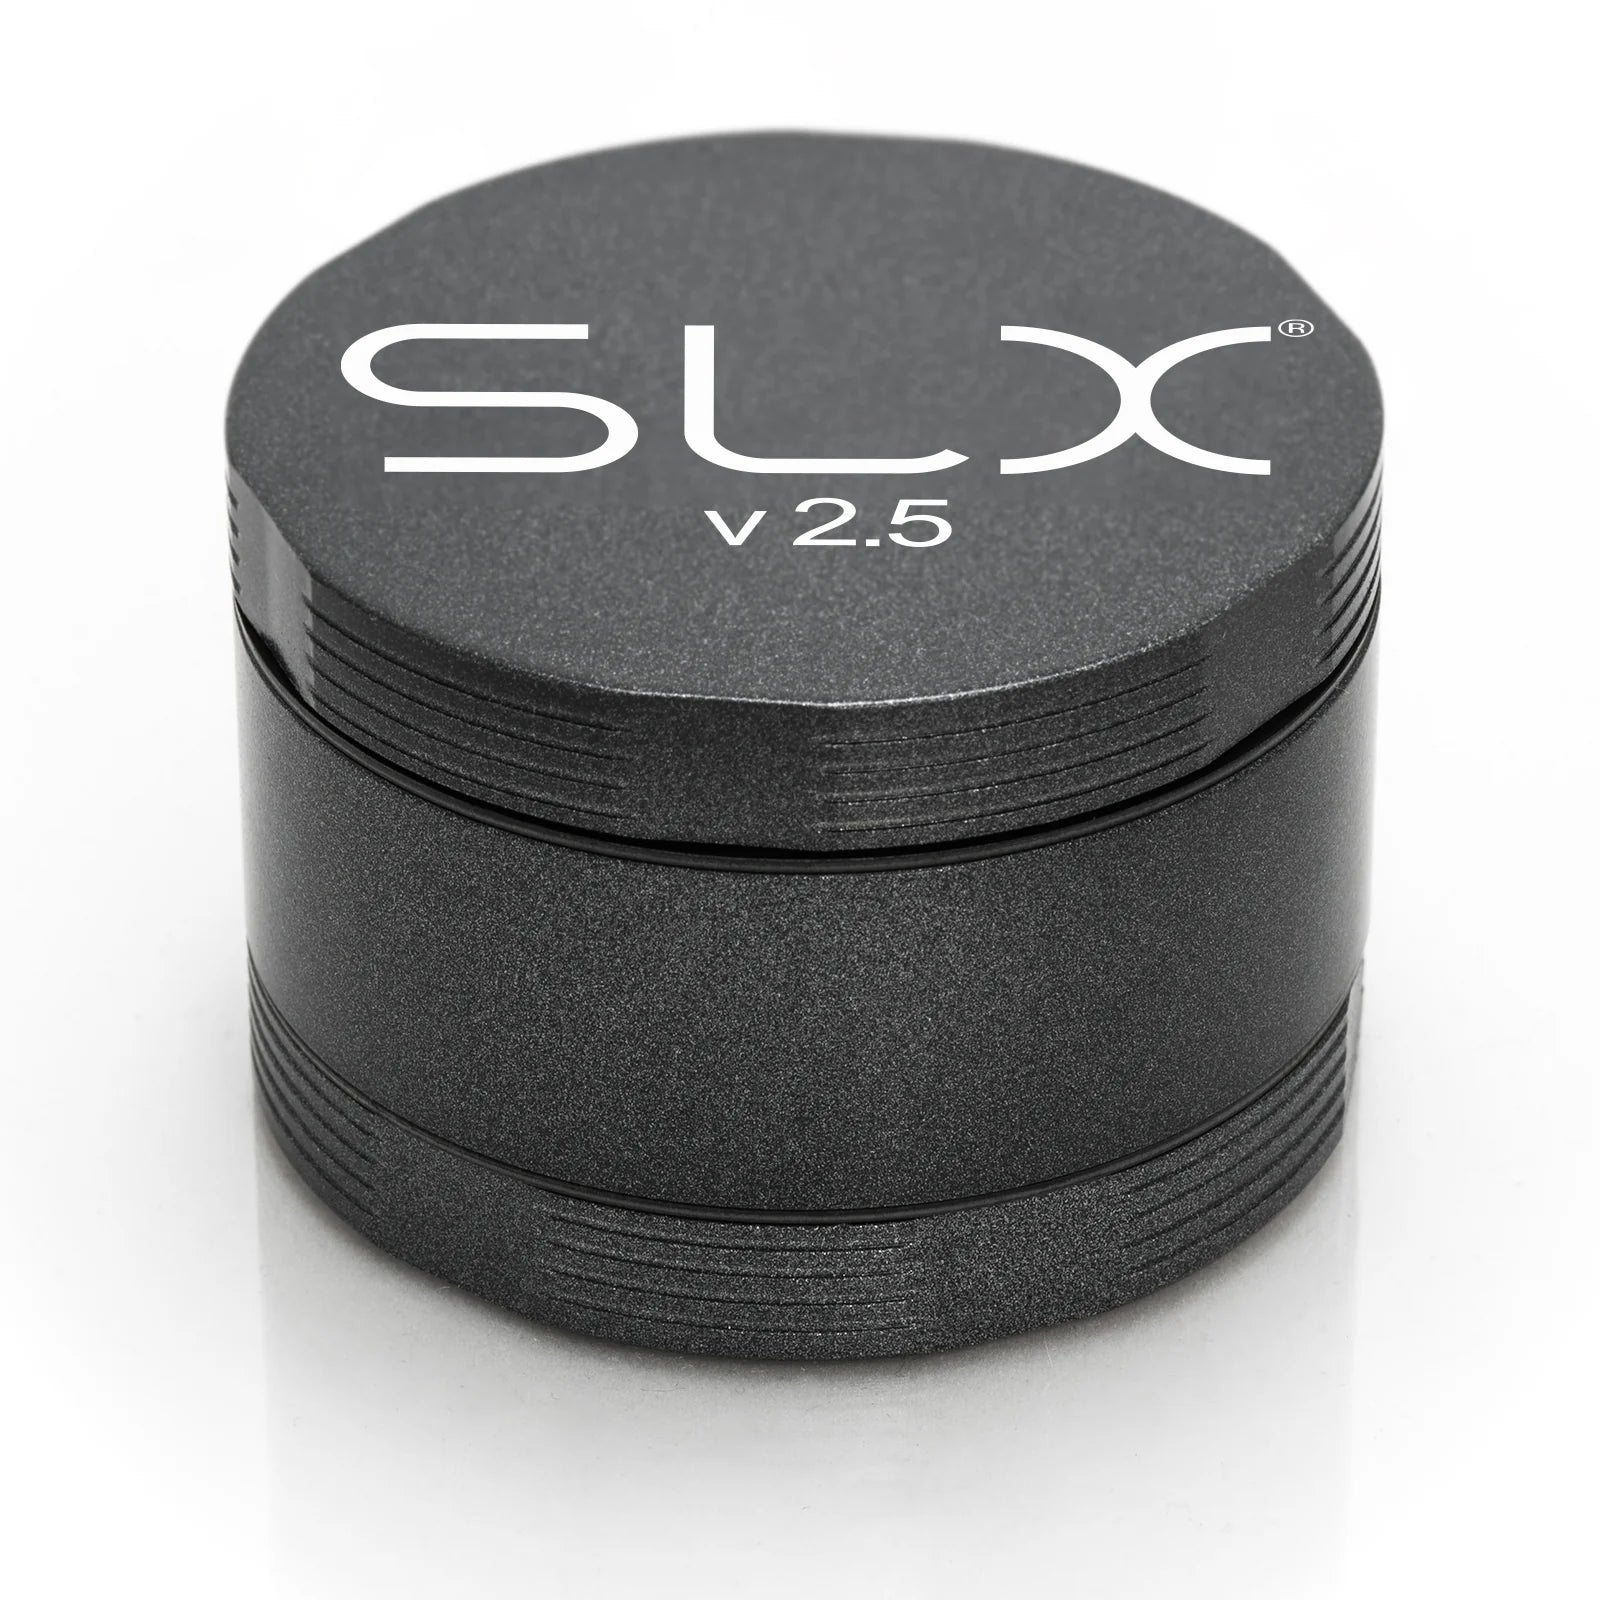 SLX v2.5 2.0" Ceramic Coat Grinder - Charcoal